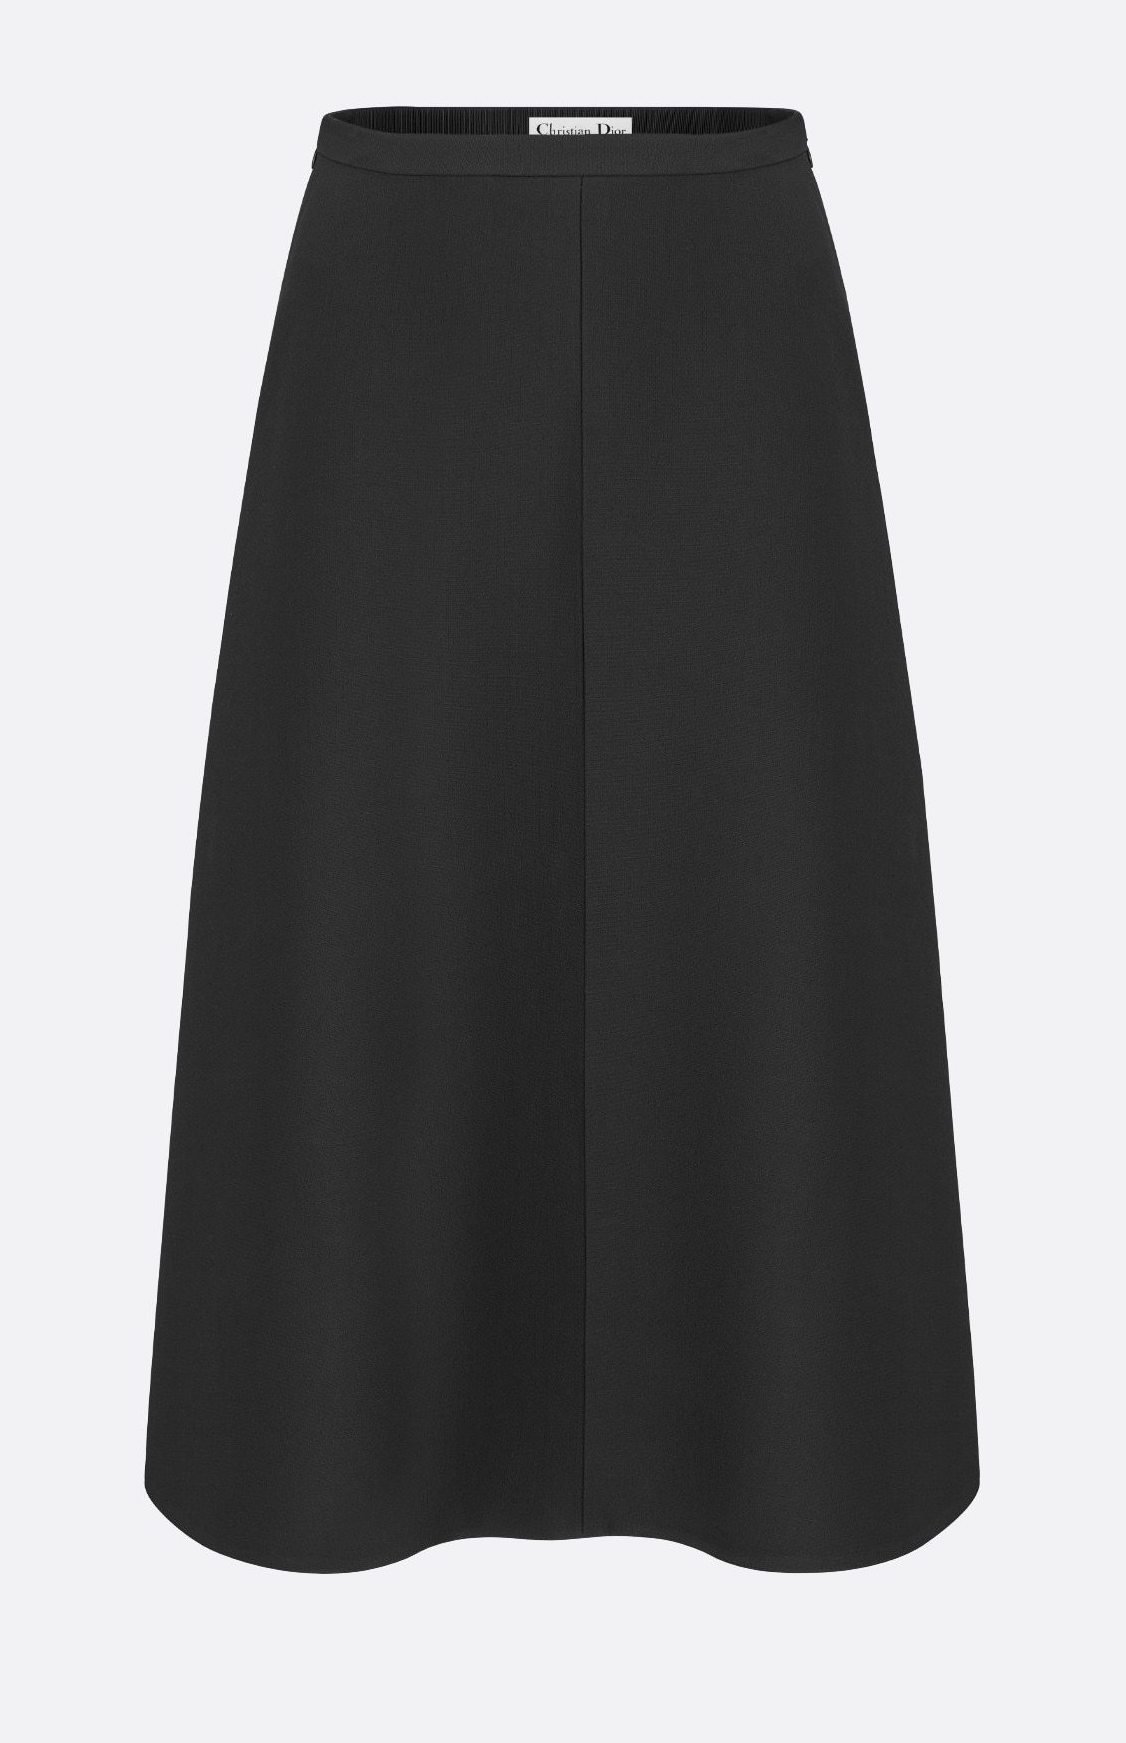 Christian Dior Seam Detail Midi Skirt in Ivory — UFO No More